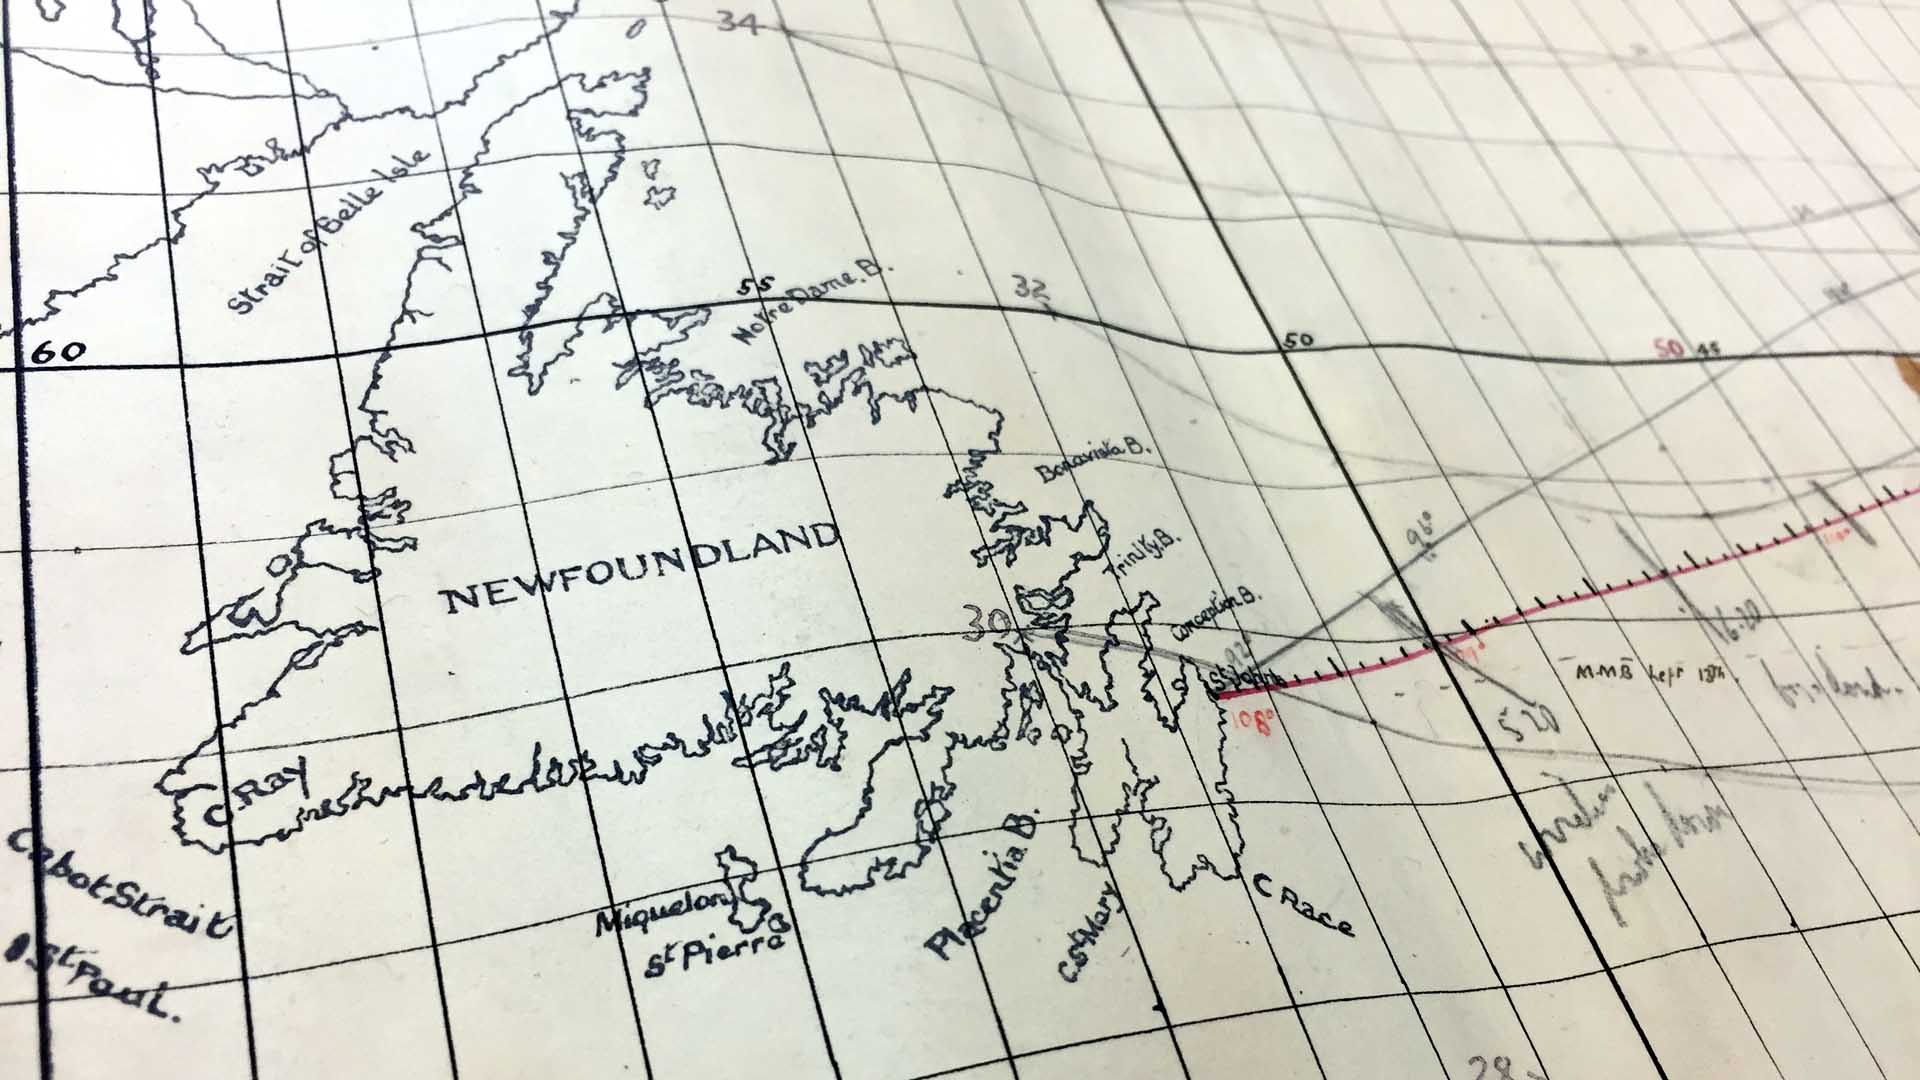 Brown's navigational charts